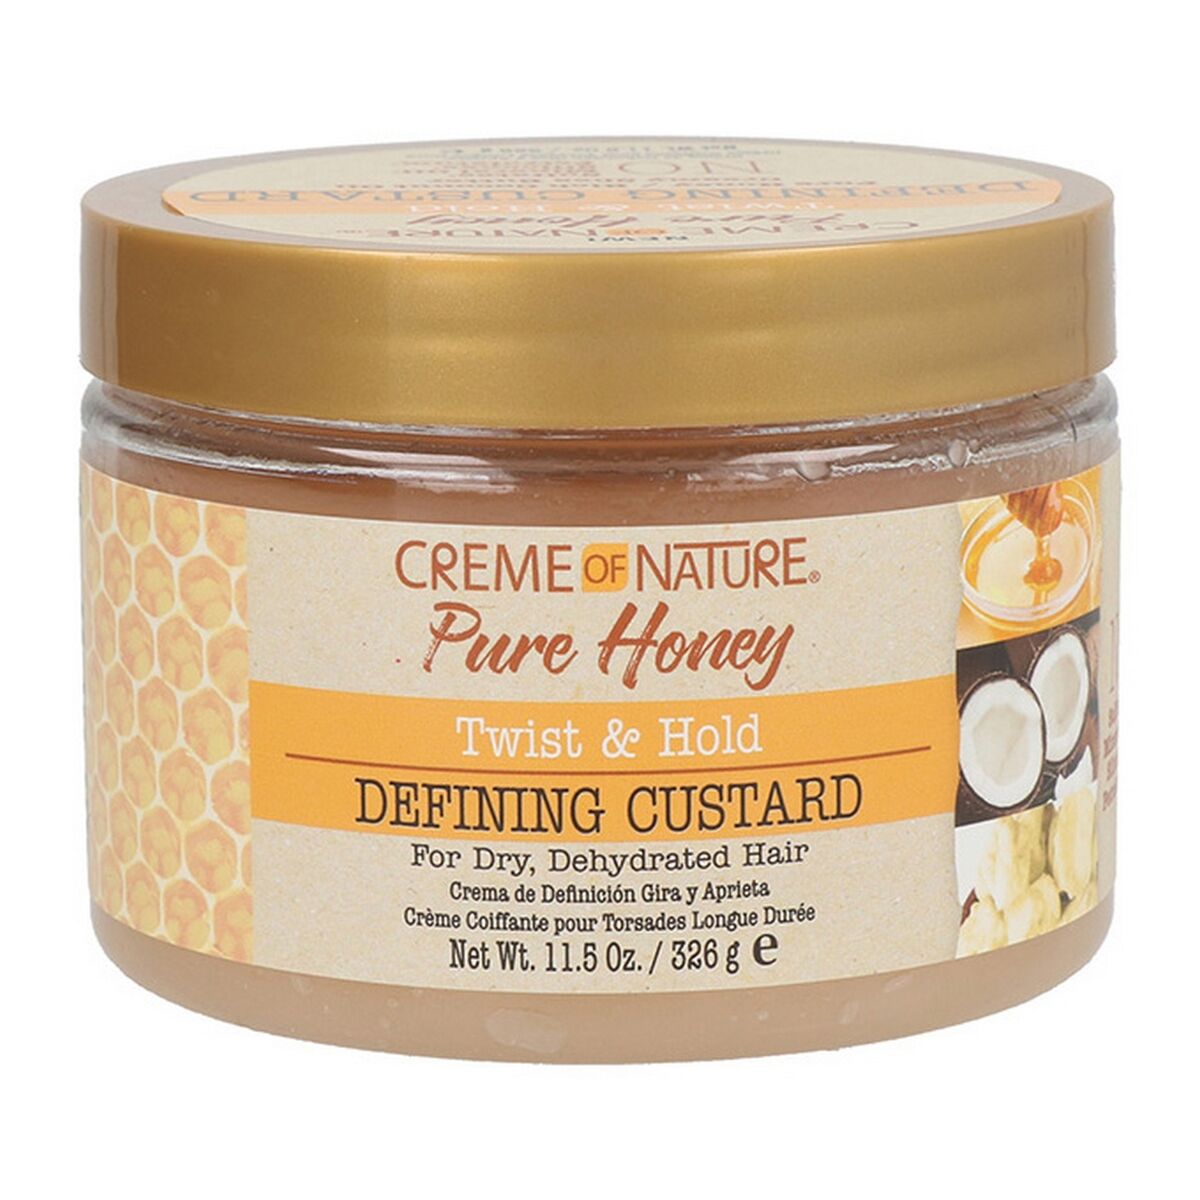 KOMPTIONAR CREME NARAVE Ure Honey Twisted & Hold Defining Custard (326 g)